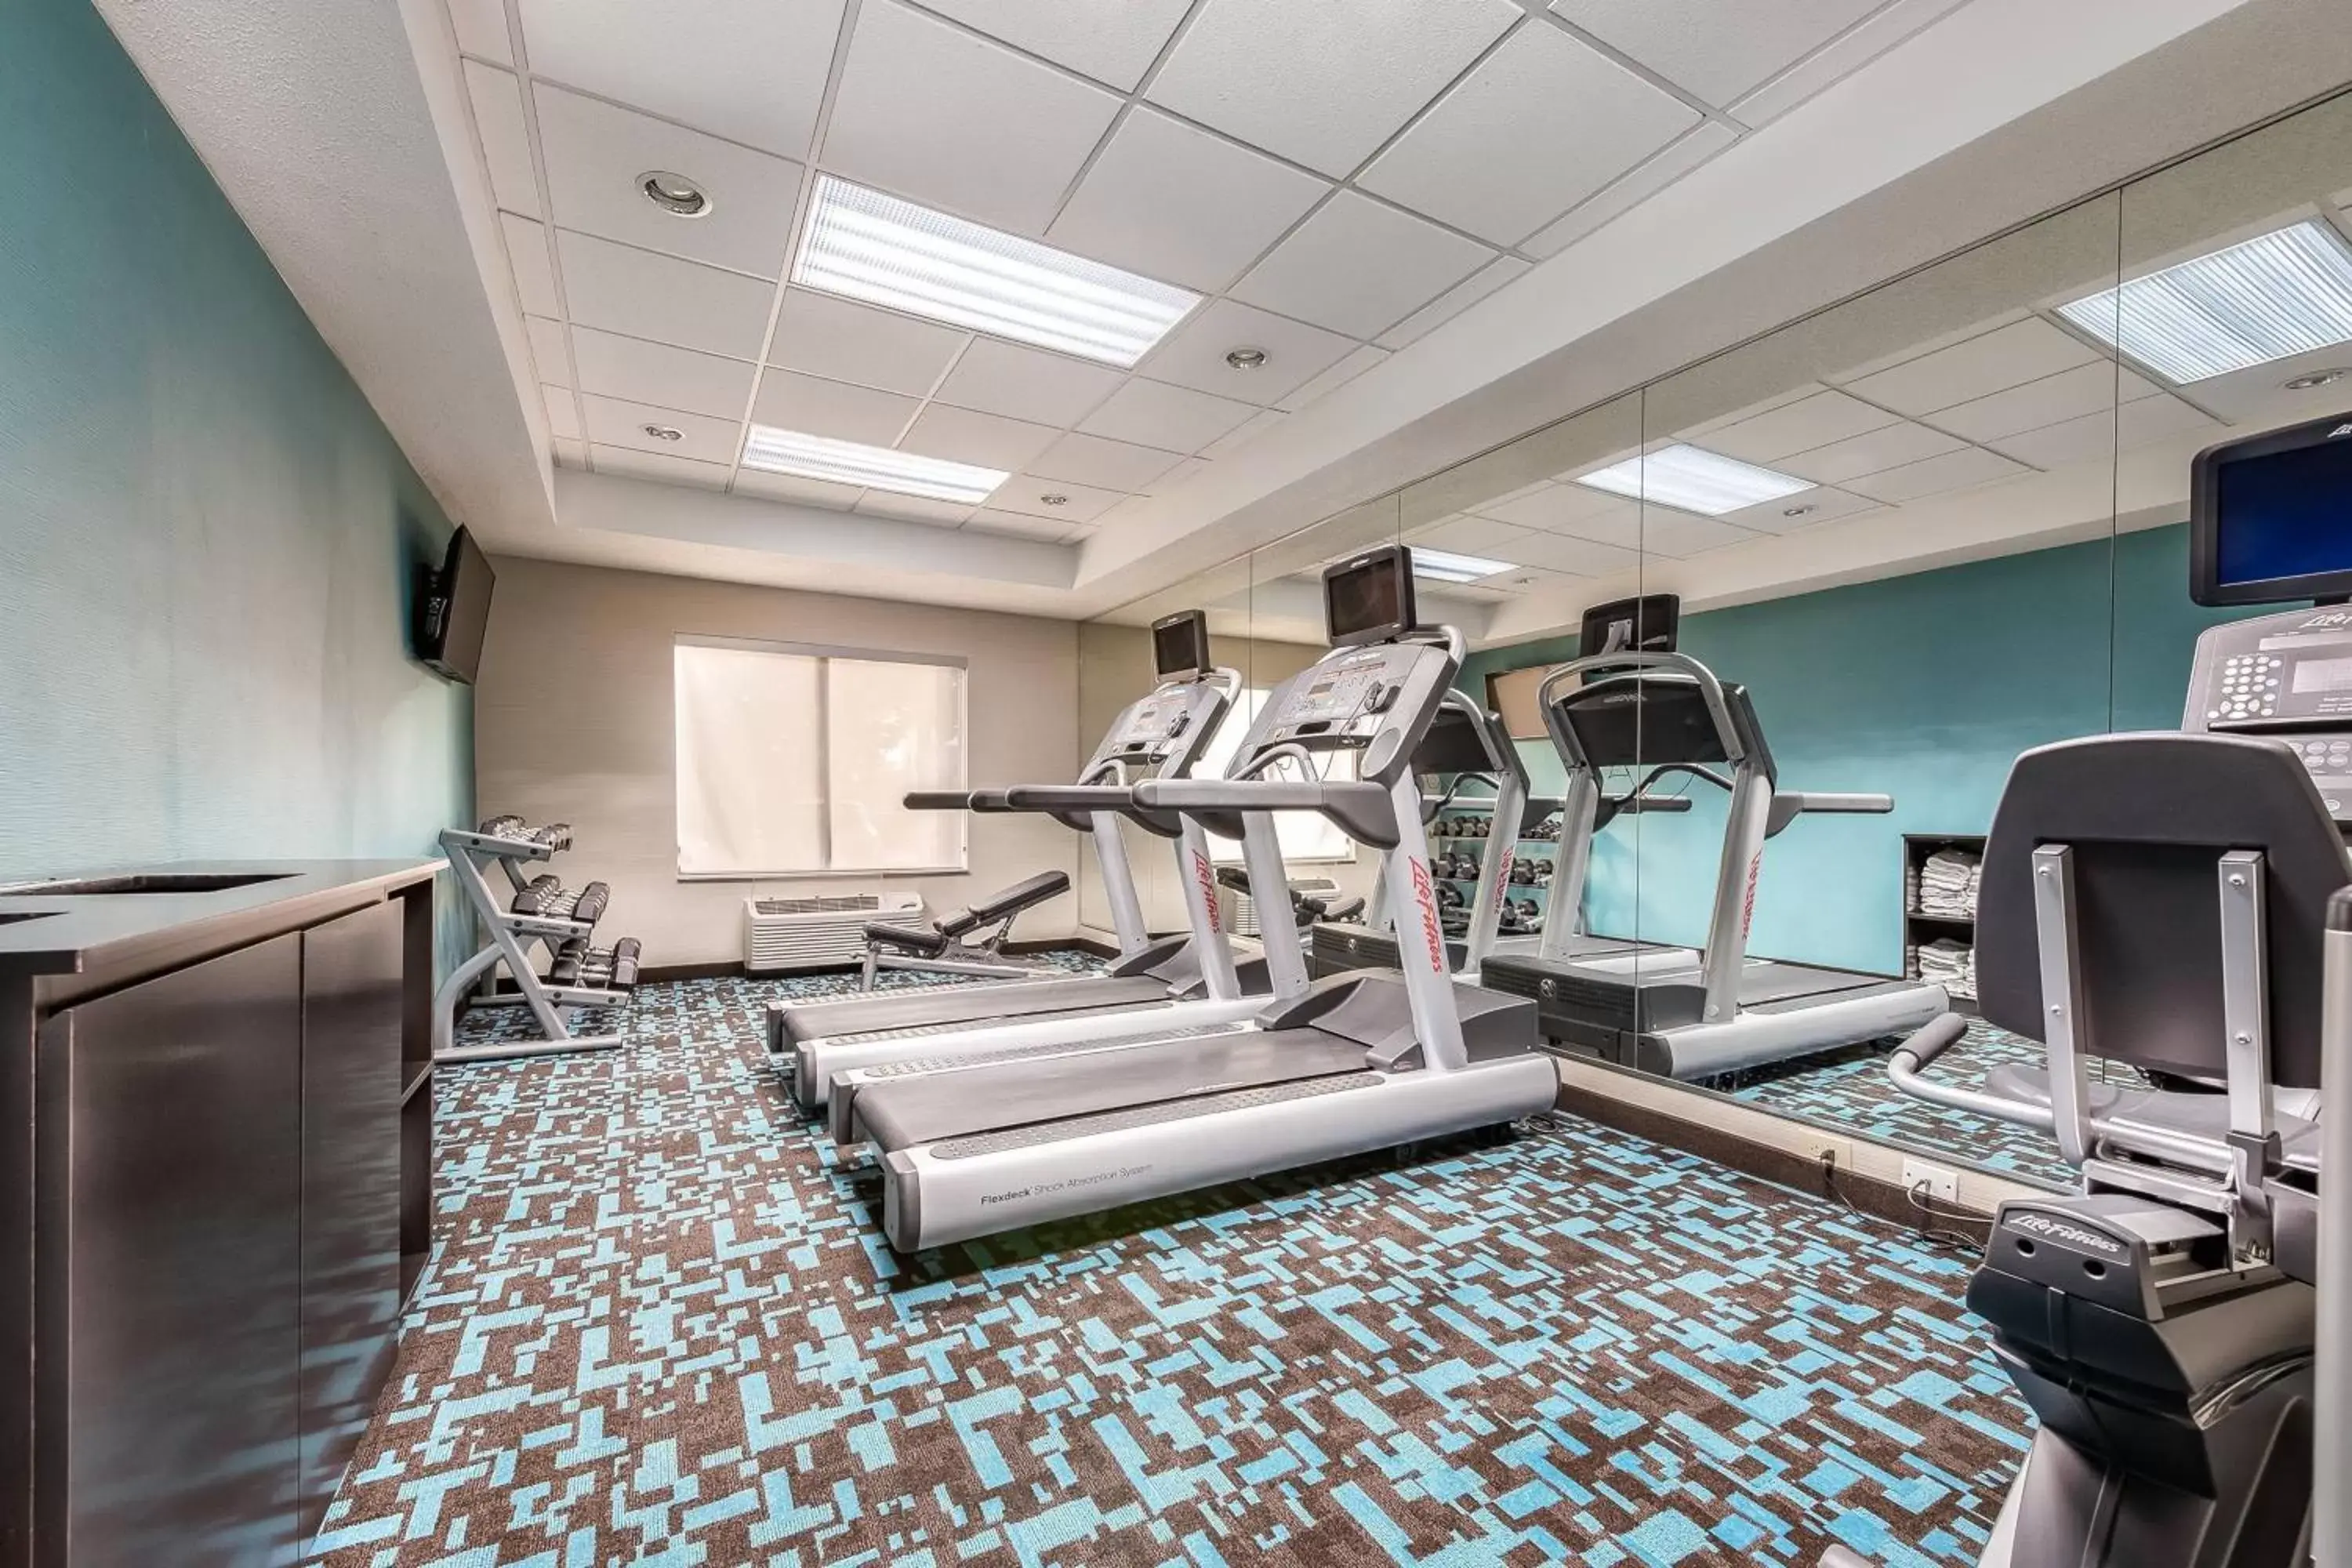 Fitness centre/facilities, Fitness Center/Facilities in Fairfield Inn Charlotte Northlake